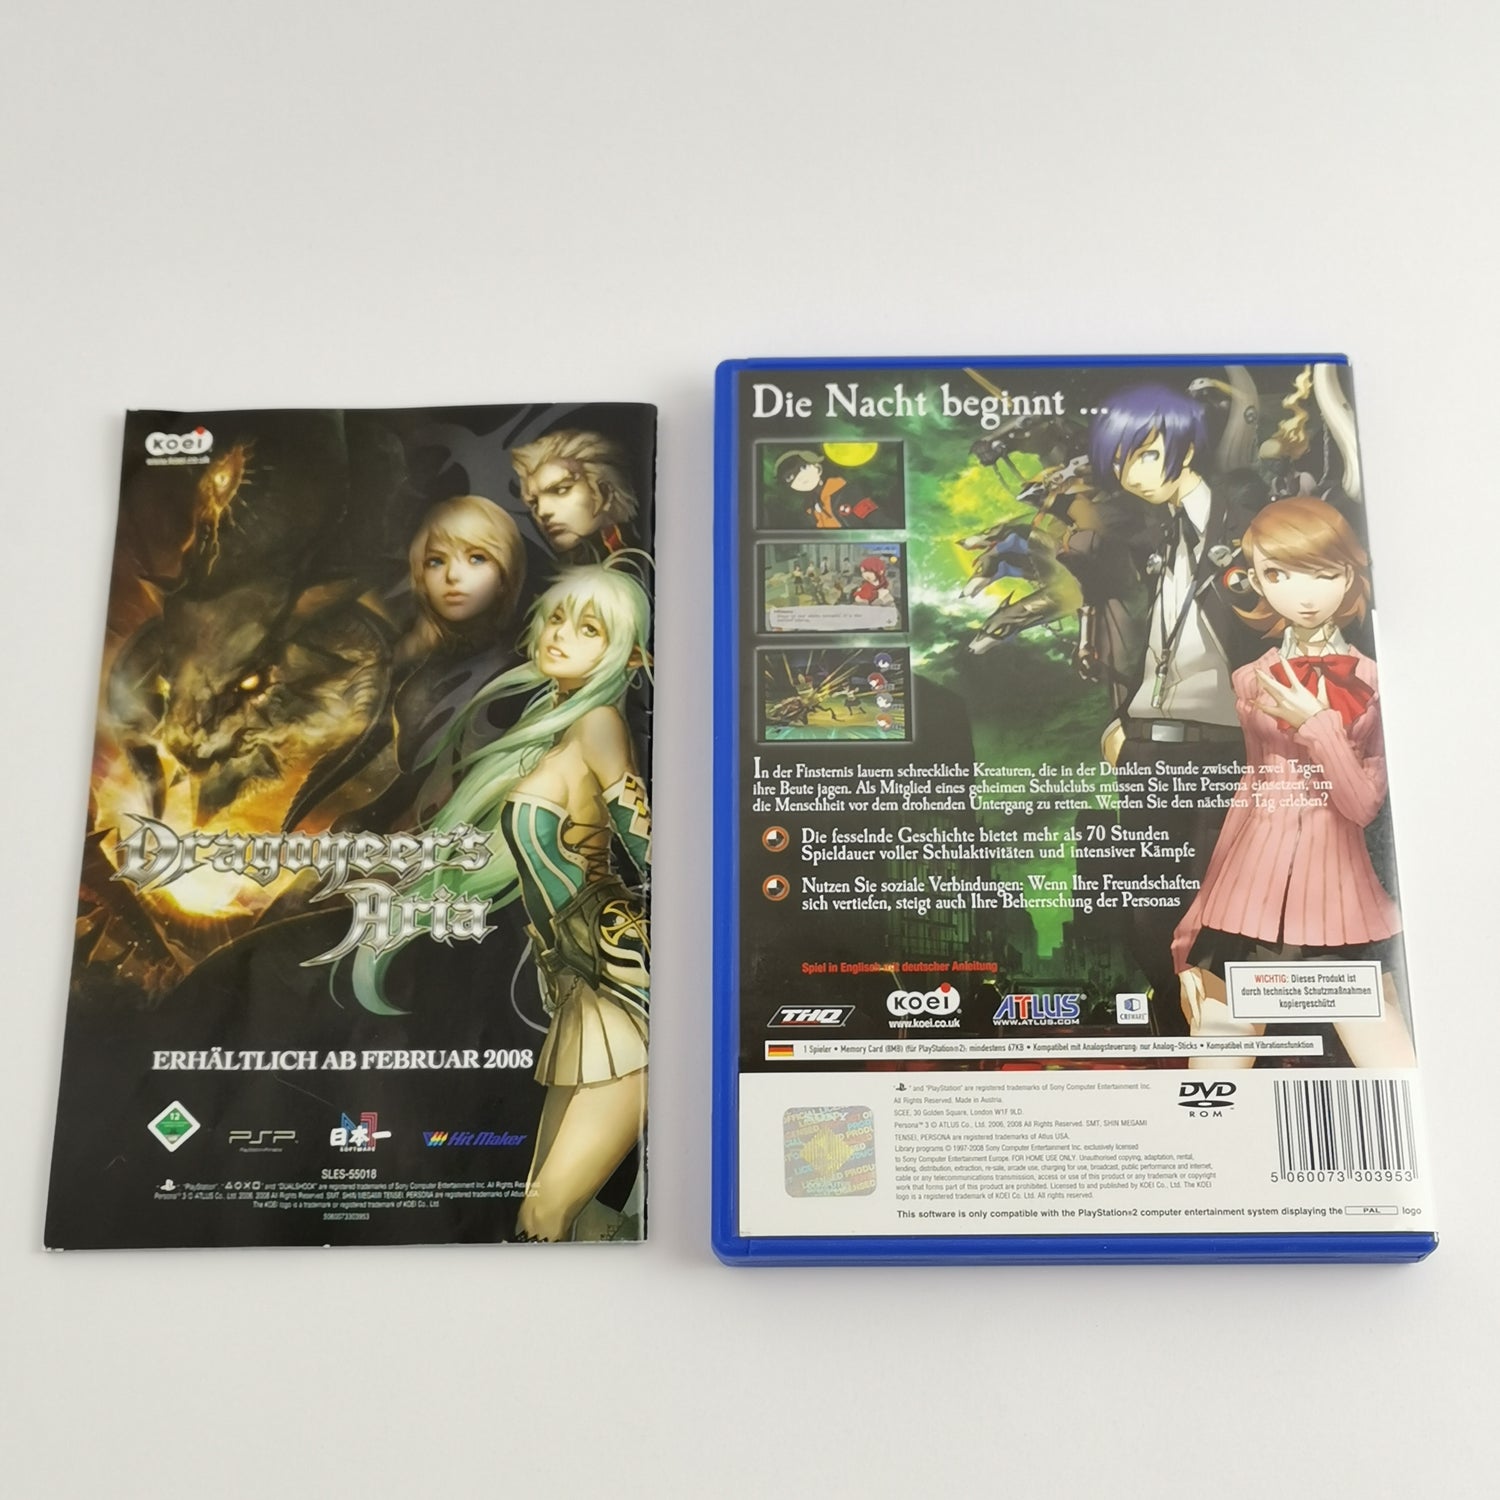 Sony Playstation 2 Spiel : Shin Megami Tensei P3 Persona 3  | PS2 OVP PAL